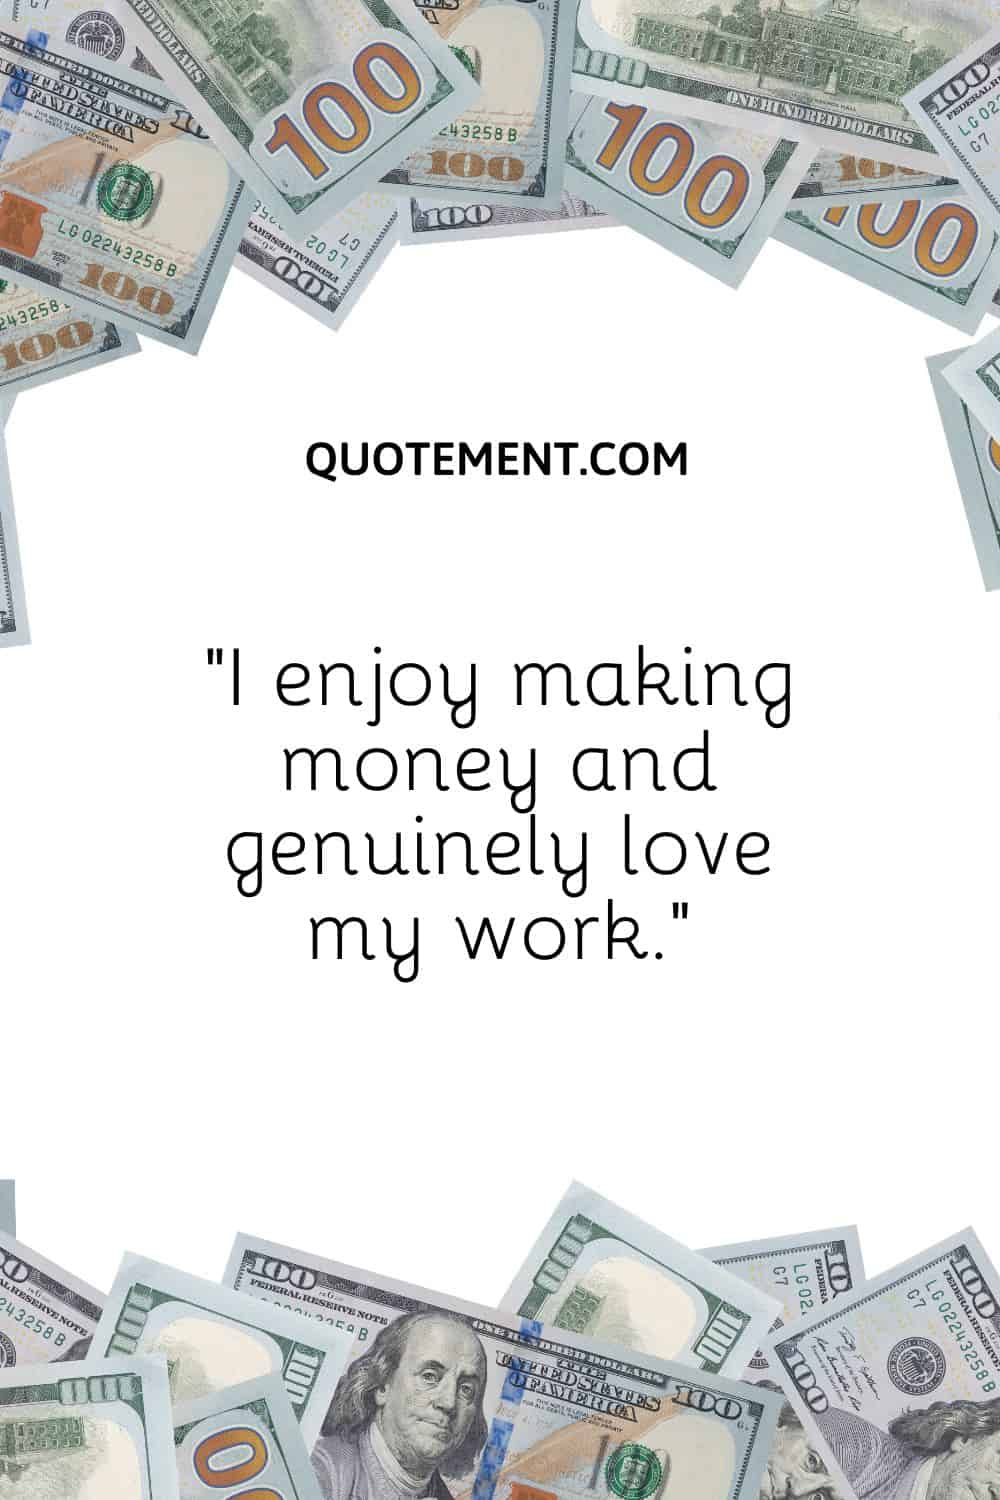 “I enjoy making money and genuinely love my work.”